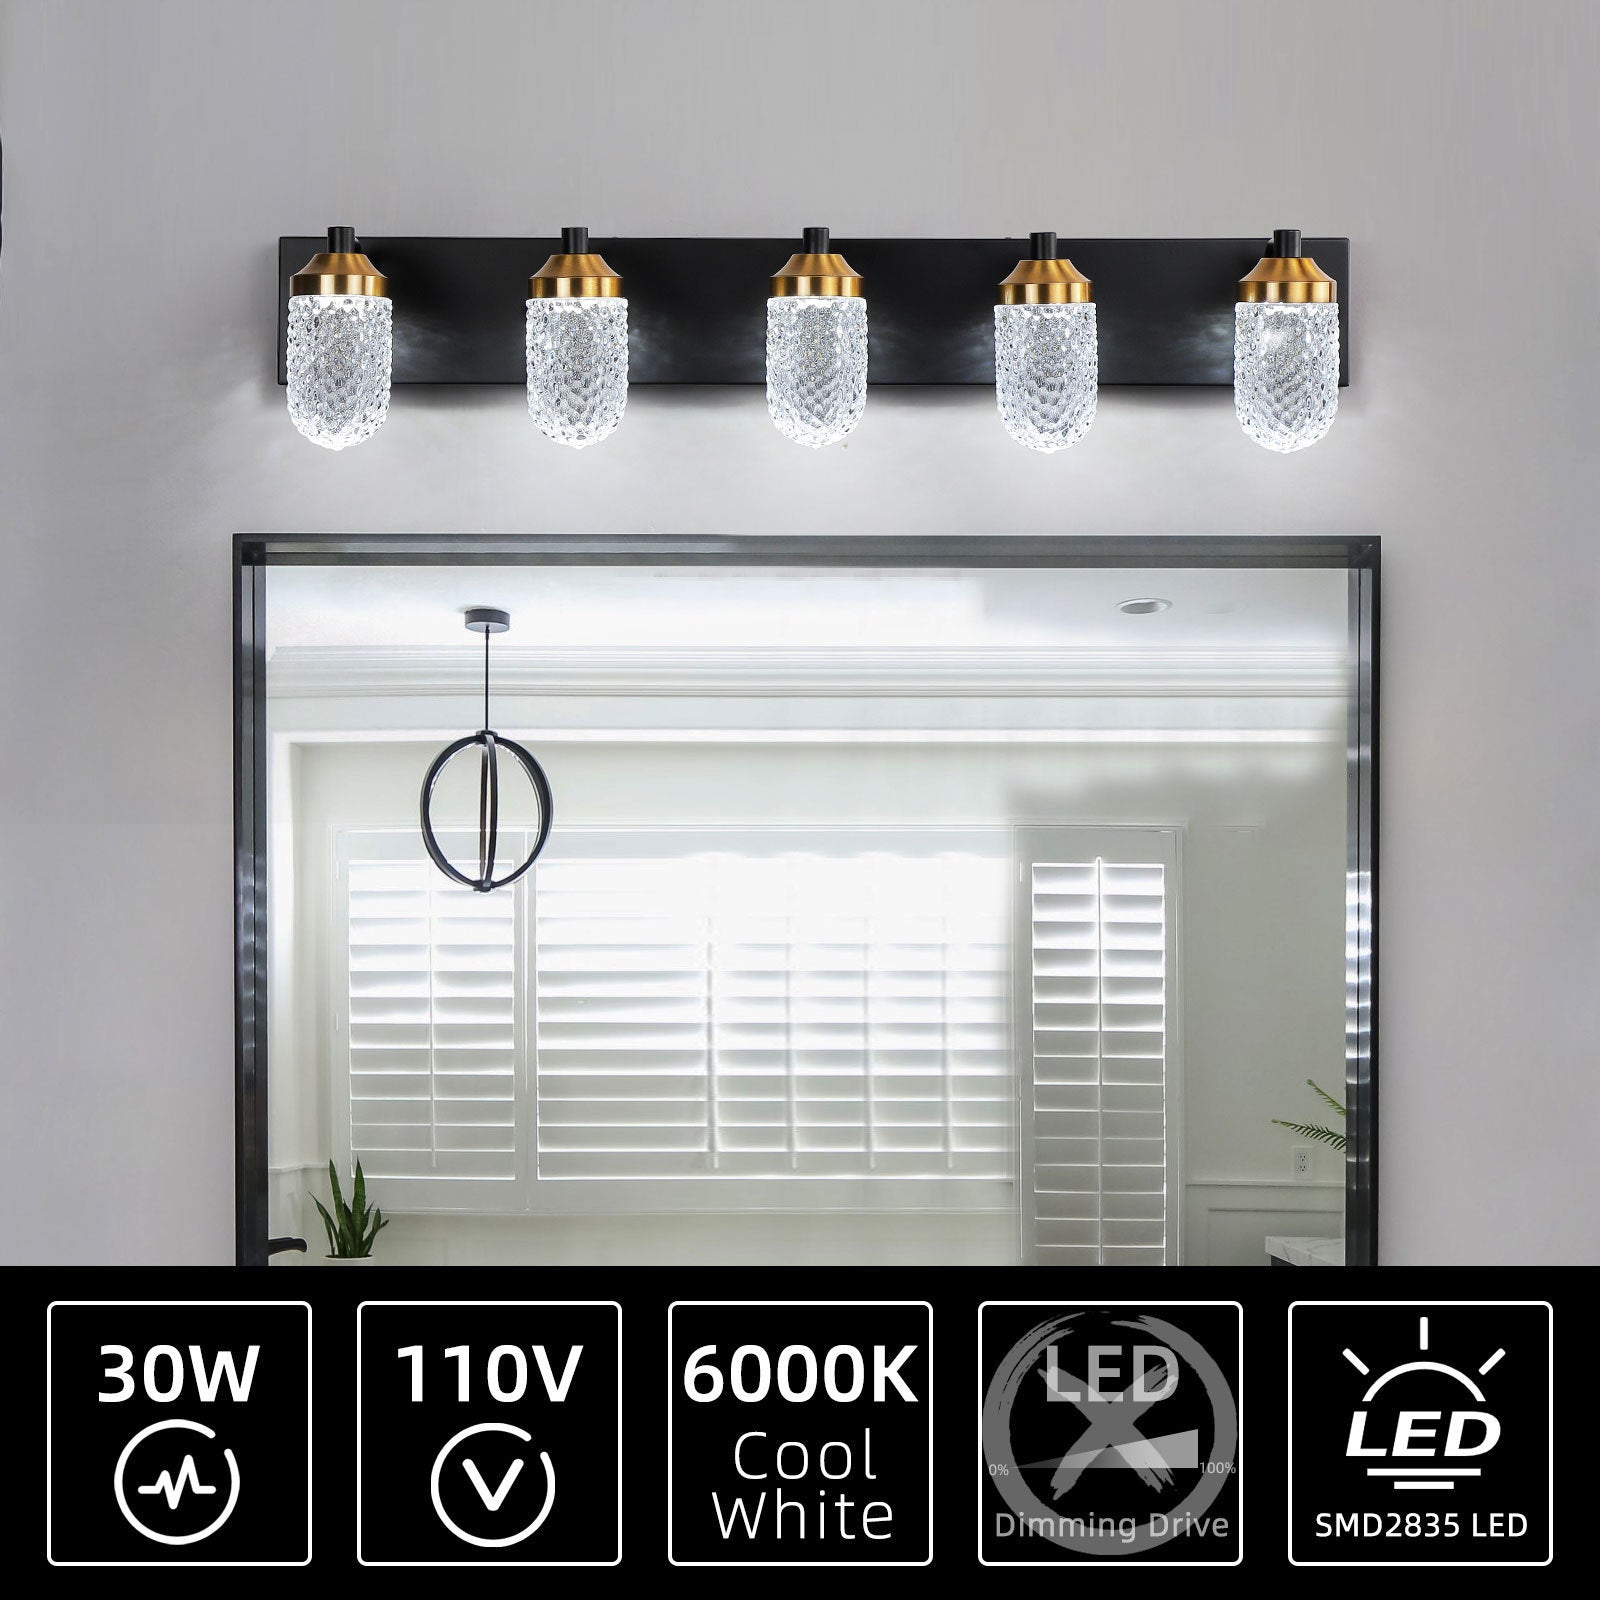 Vanity Lights With 5 LED Bulbs For Bathroom Lighting - Black